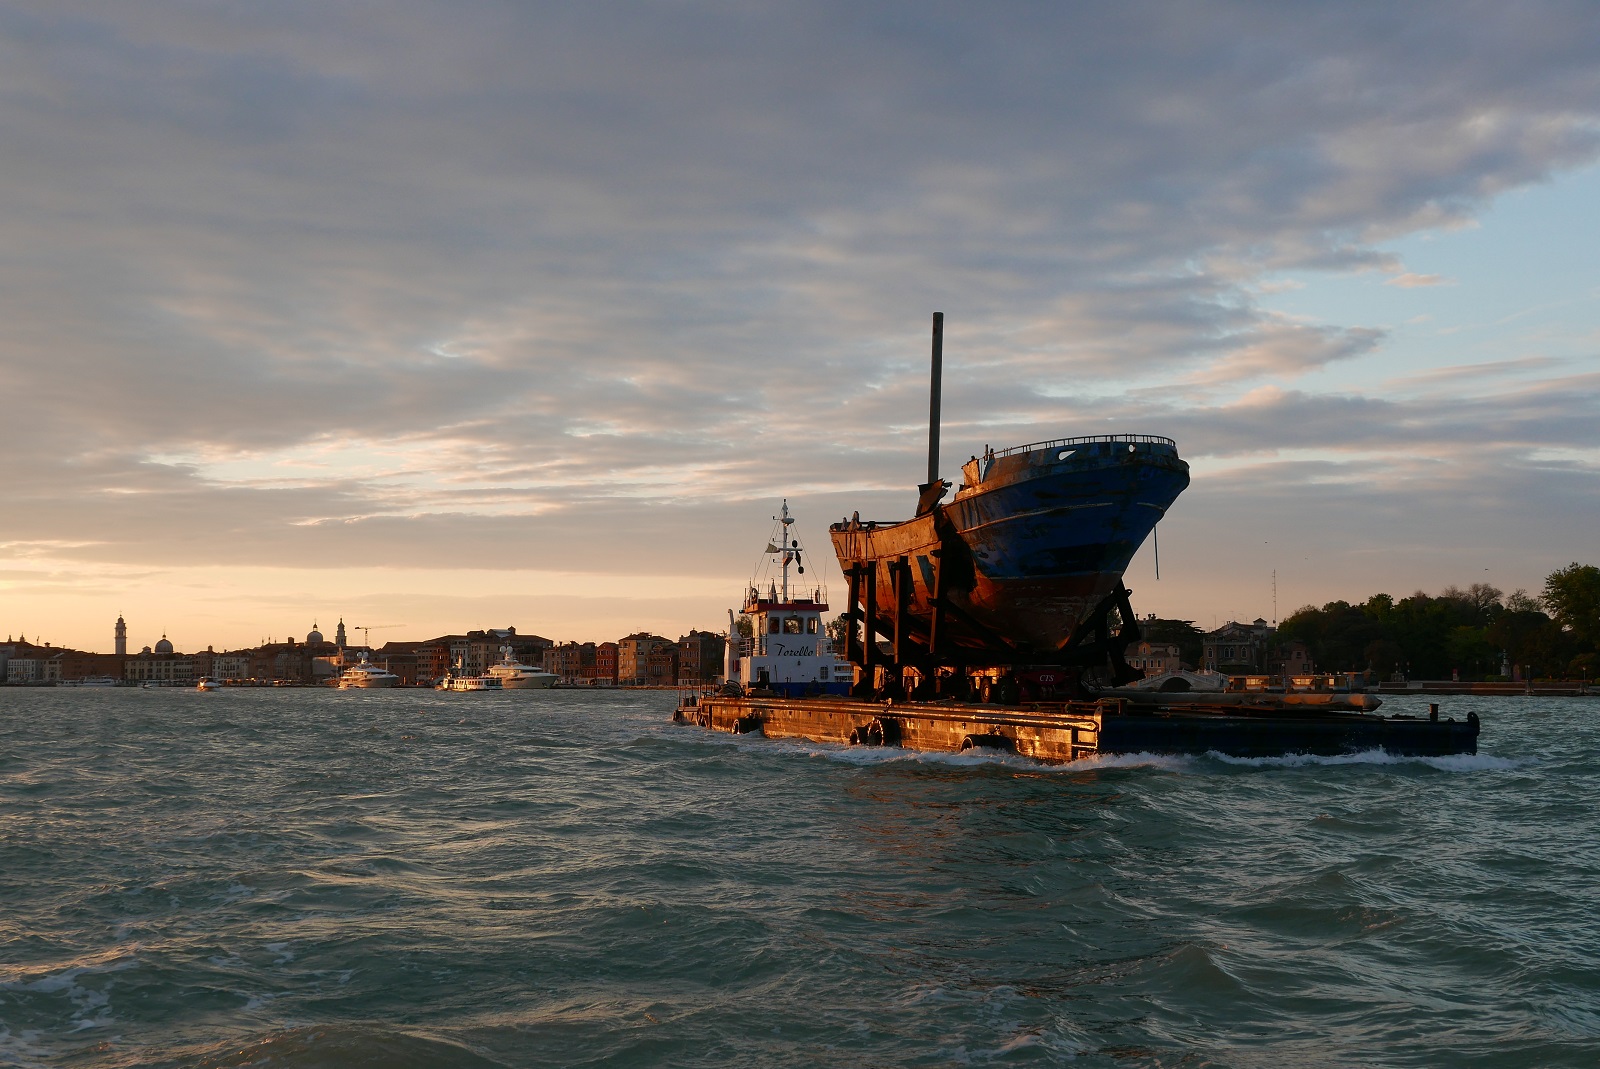 Christoph Büchel, Barca Nostra, Venezia, 2019. The migrant shipwreck of 18 April 2015 being transported from the Pontile Marina Militare di Melilli (NATO) to the Arsenale in Venice, Italy. Photo © BARCA NOSTRA